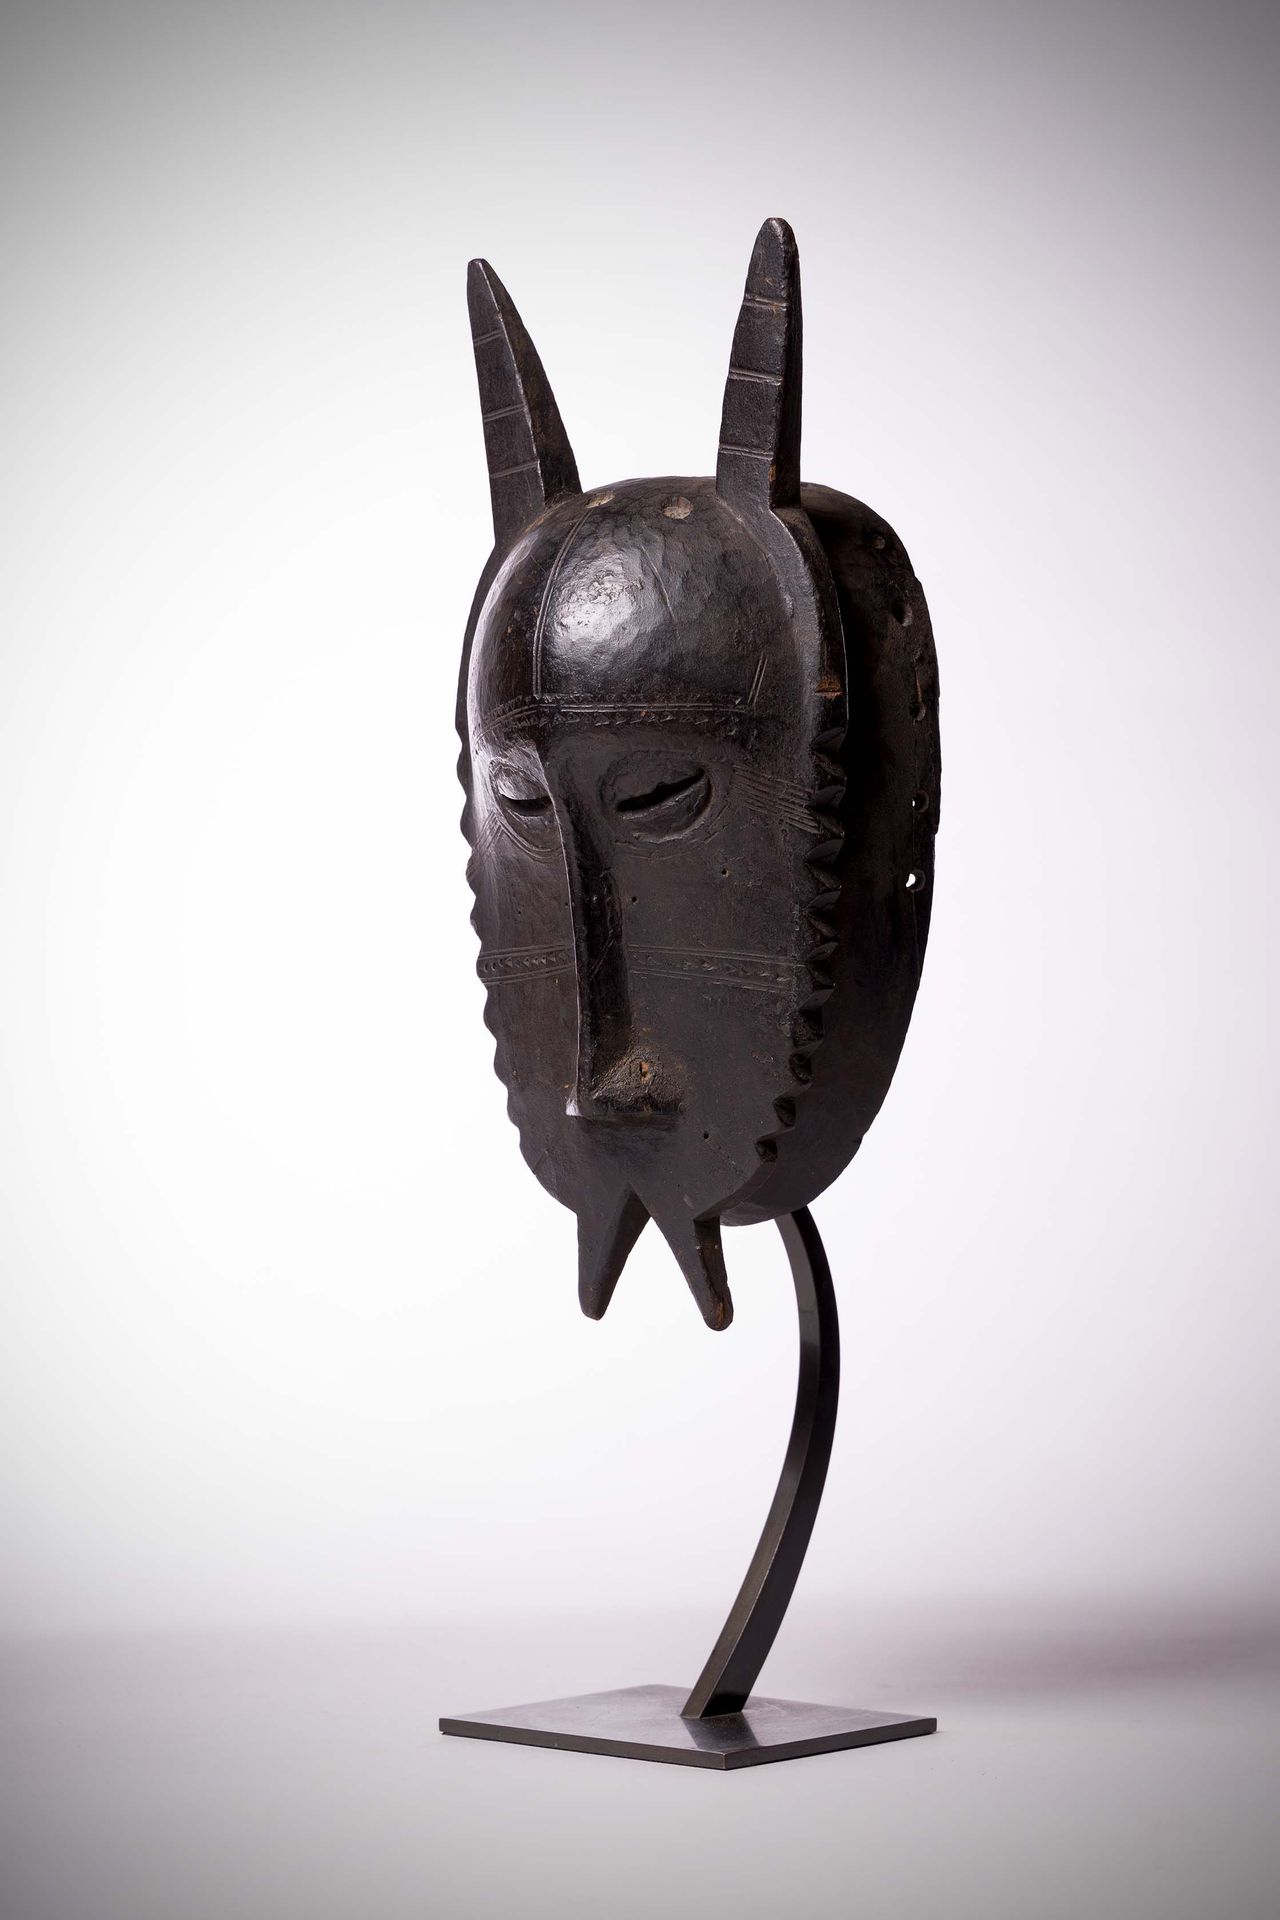 Null 班巴拉

马林科

(马里)非常古老的拟人拟物面具，由重木制成，有黑色的漆面光泽，可能属于科雷崇拜。

有两点的山羊胡回答了羚羊的两个角。

出处：V&hellip;